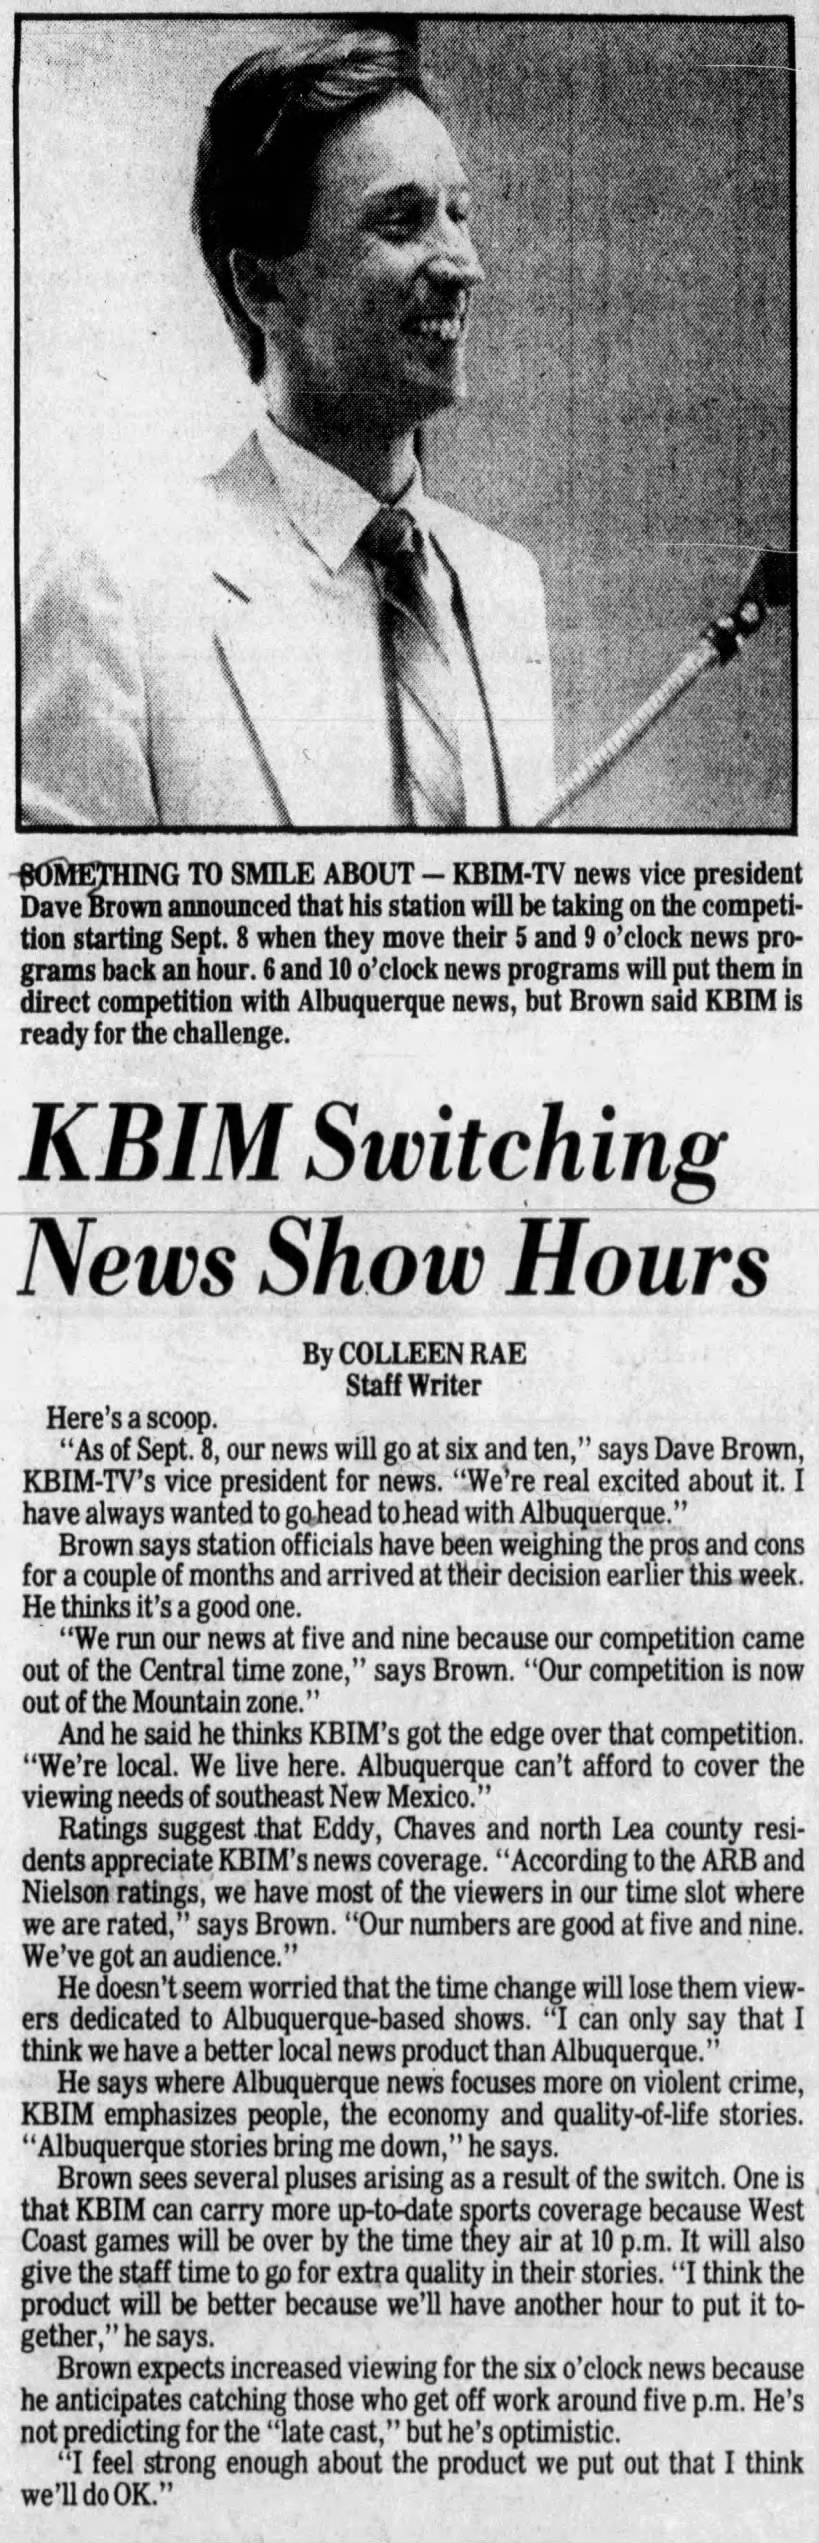 KBIM Switching News Show Hours